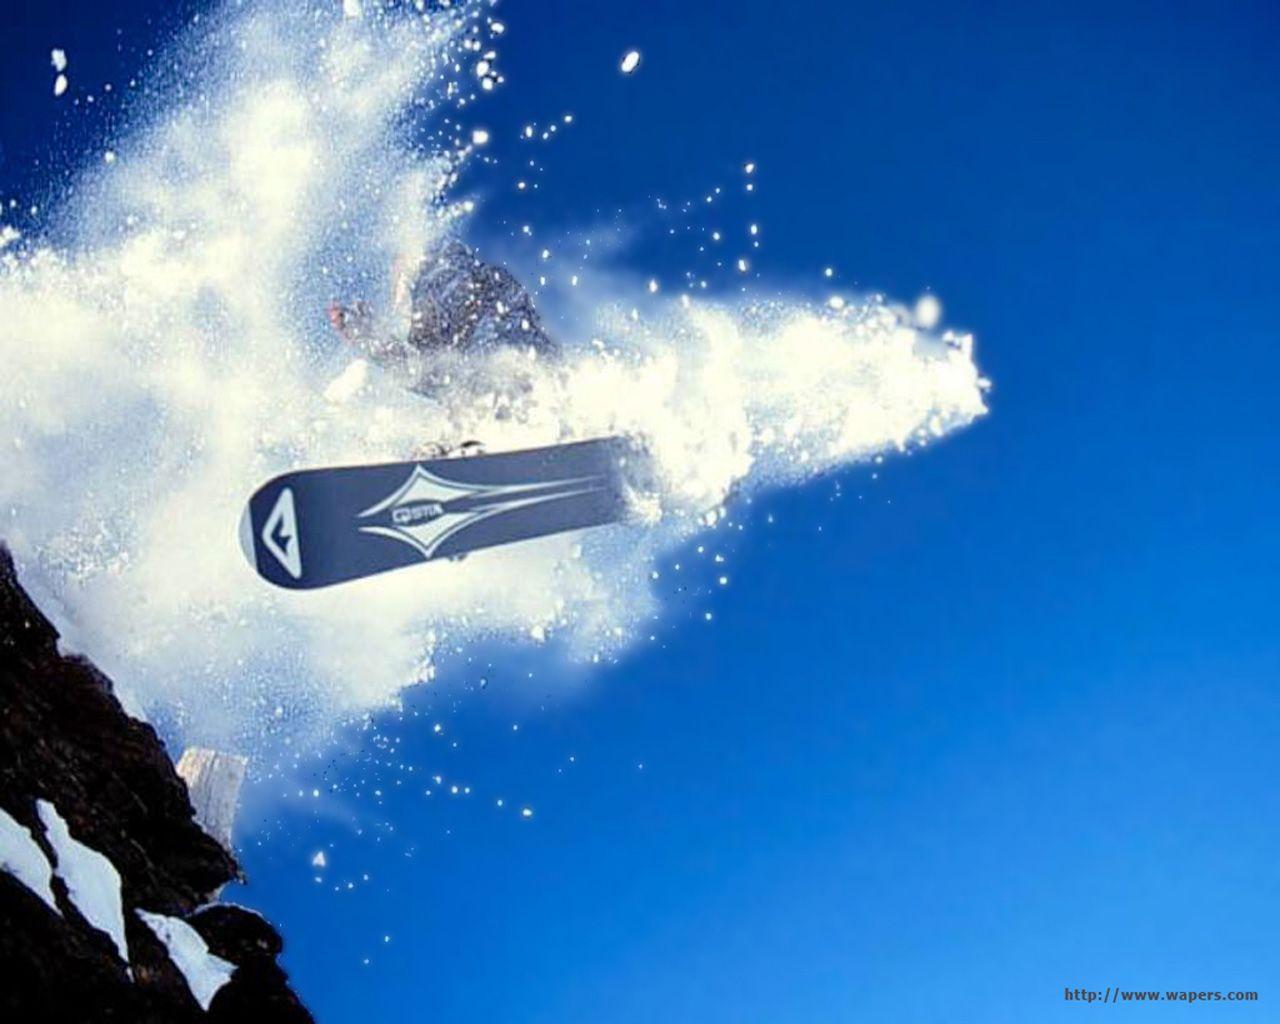 Snowboarding Wallpaper HD. iPhone Wallpaper Site